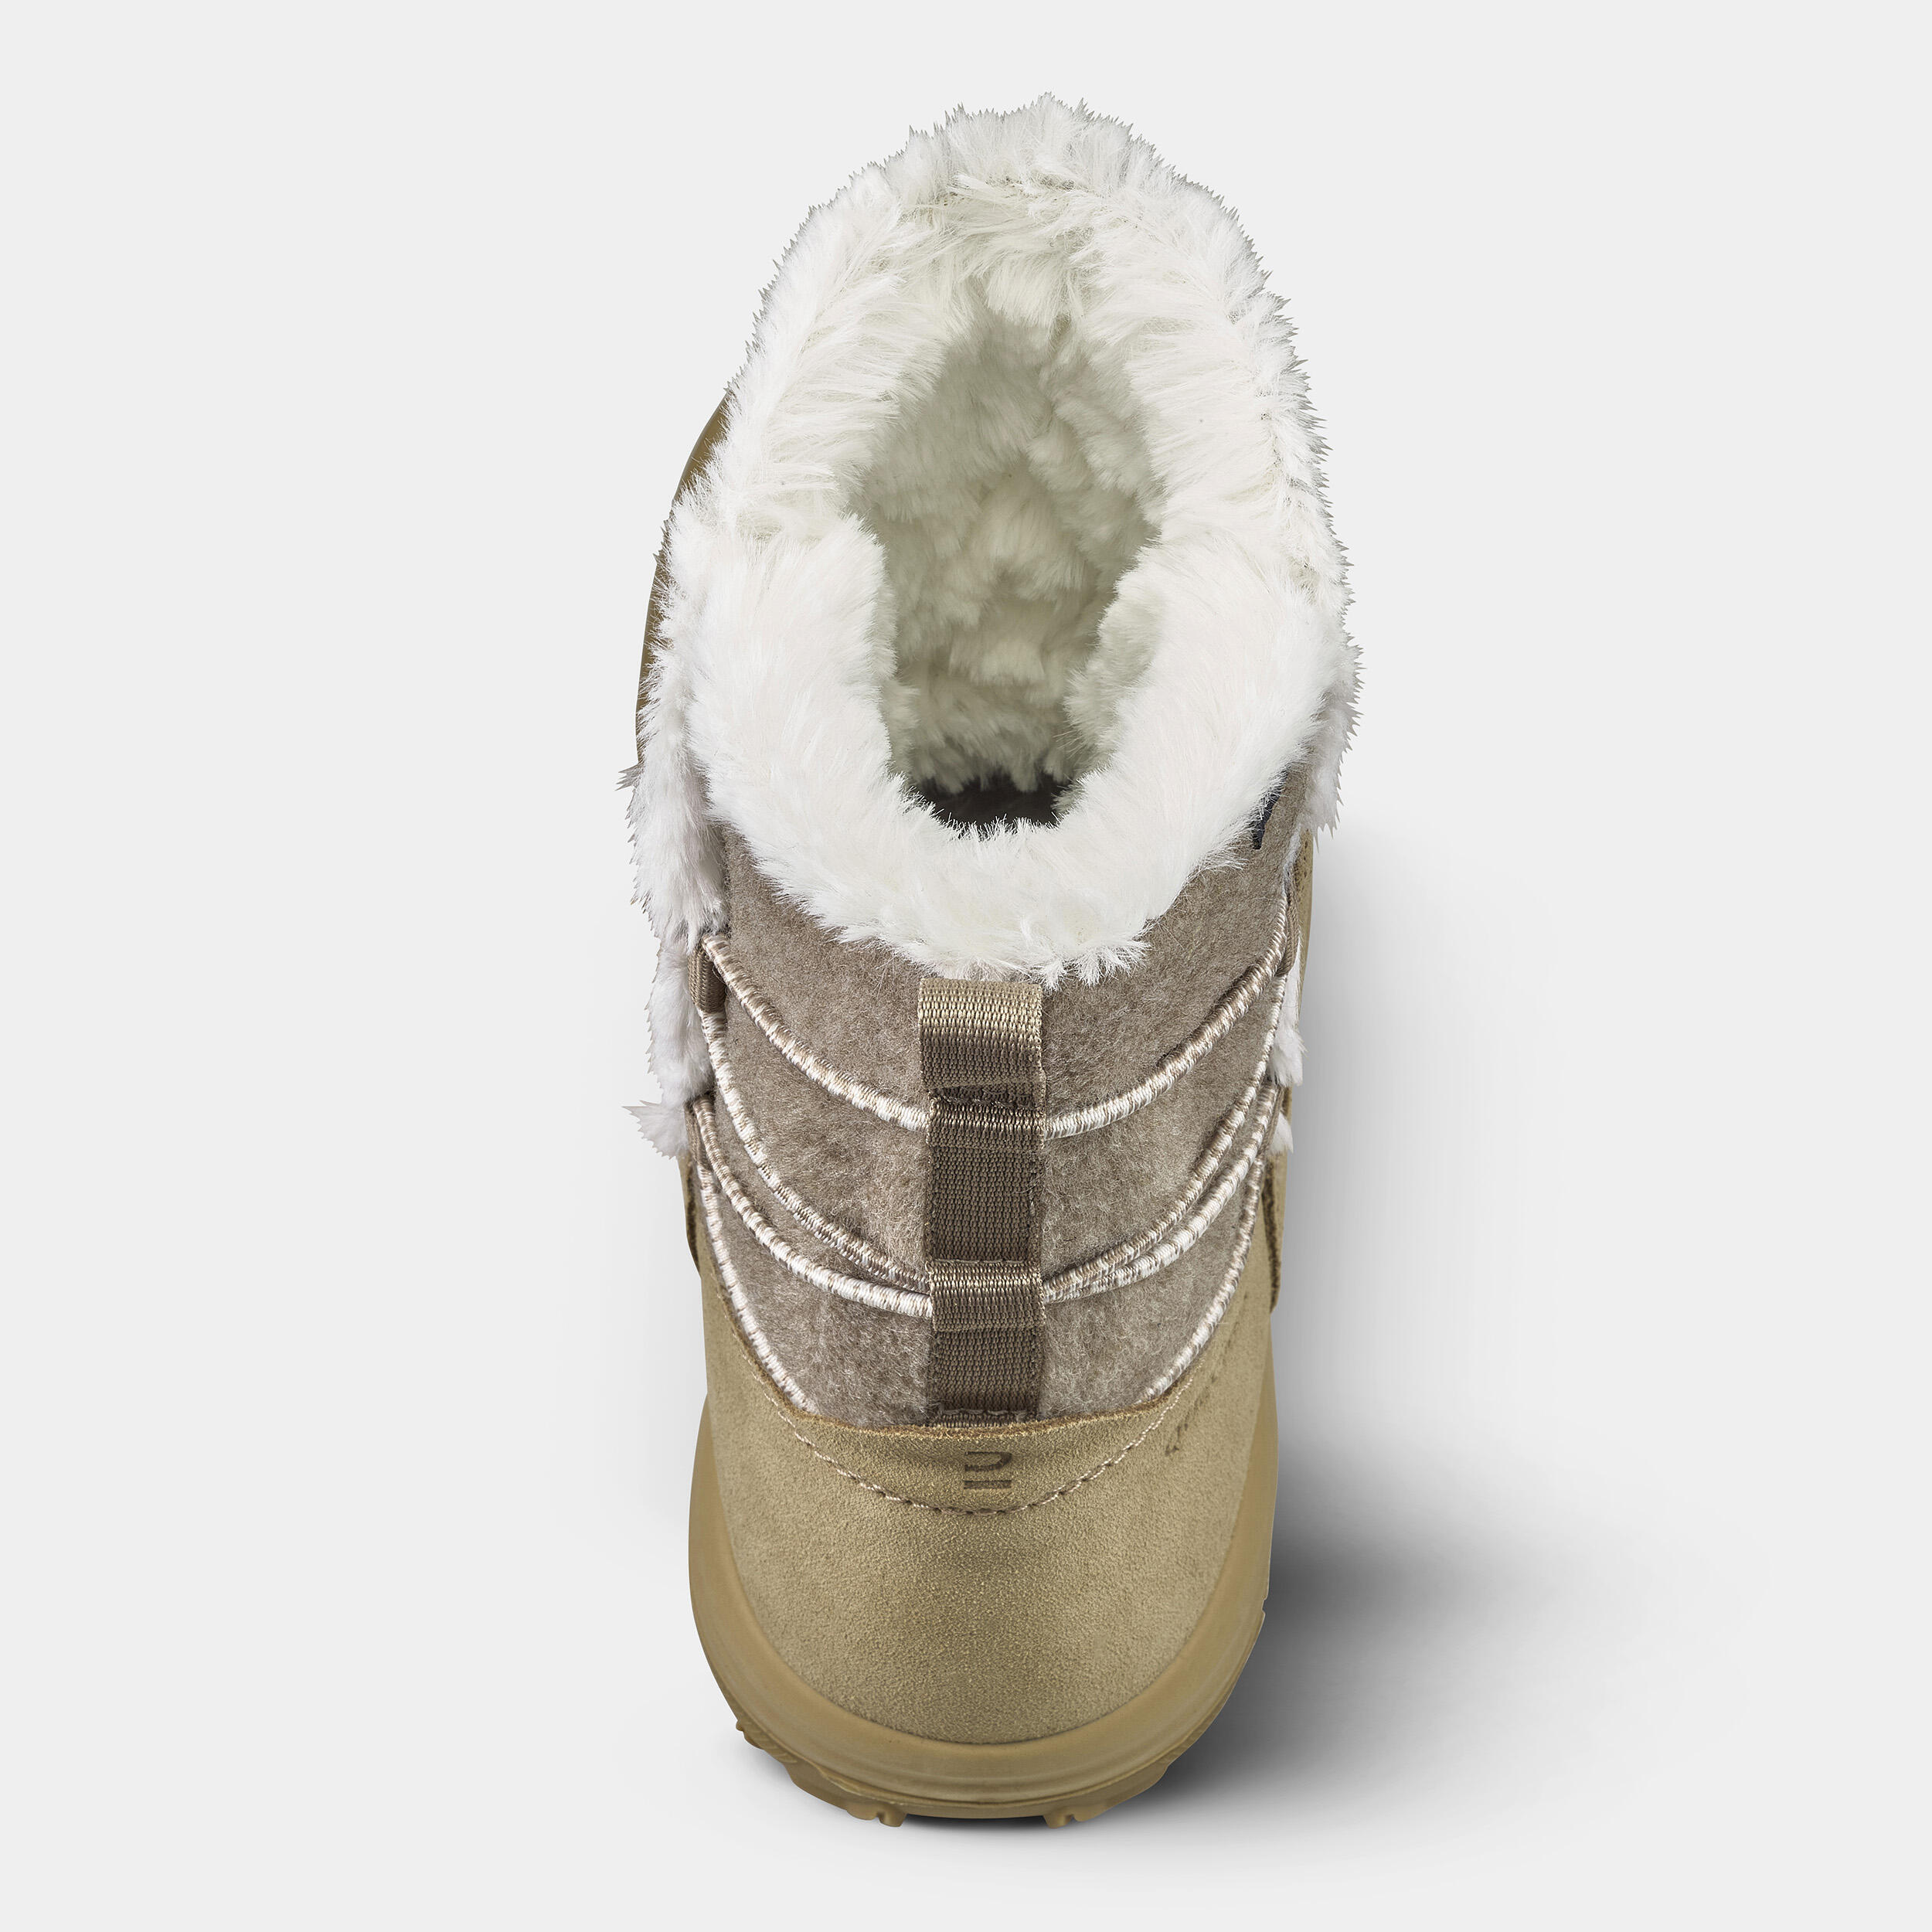 Women's warm waterproof snow hiking boots - SH500 leather 10/10